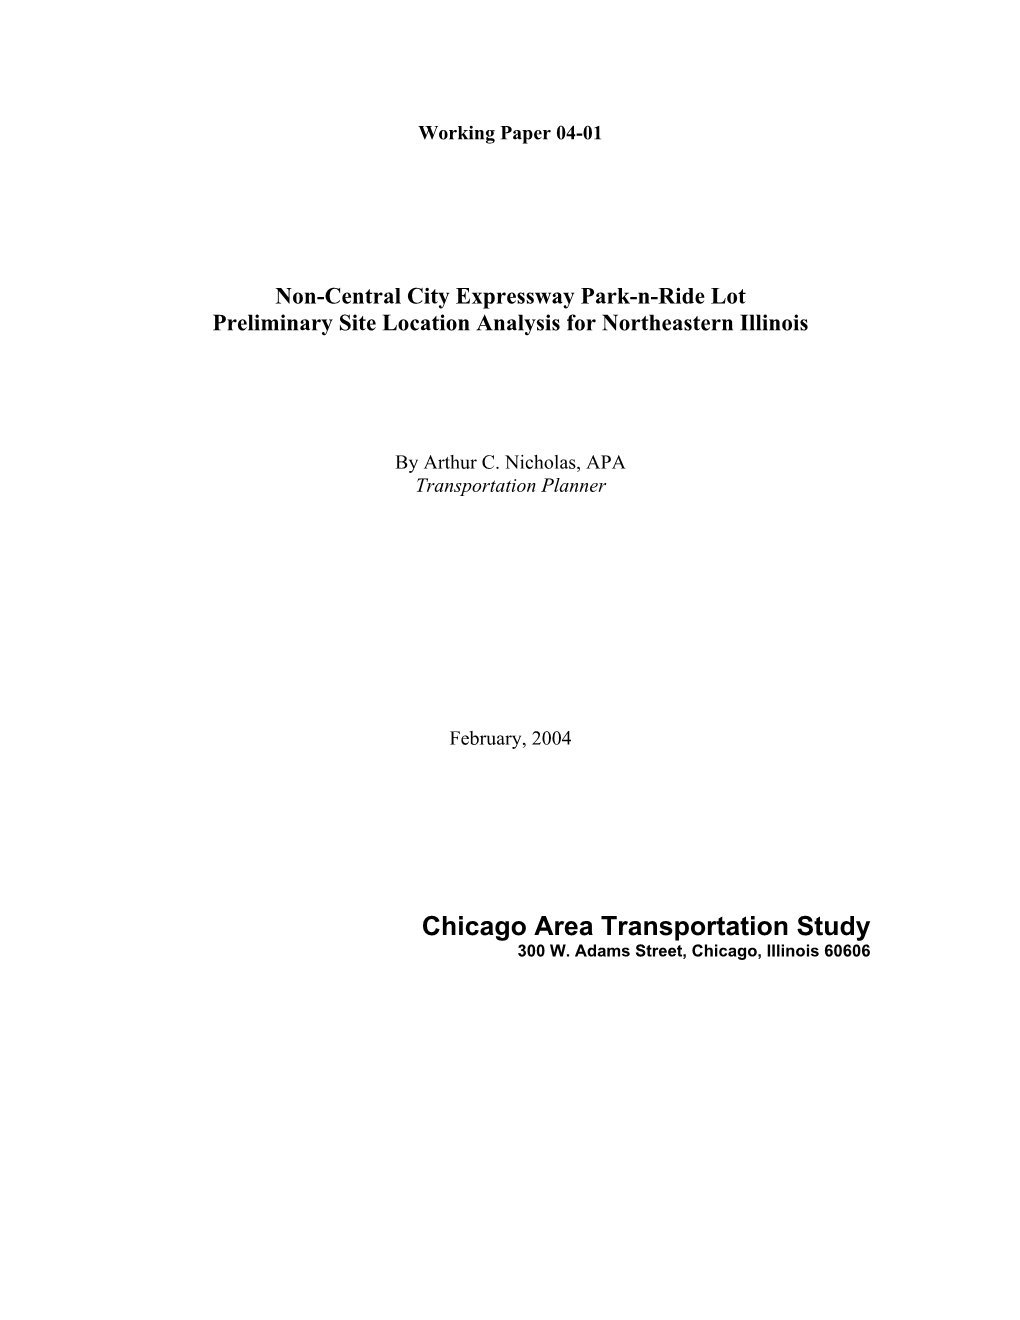 Chicago Area Transportation Study 300 W